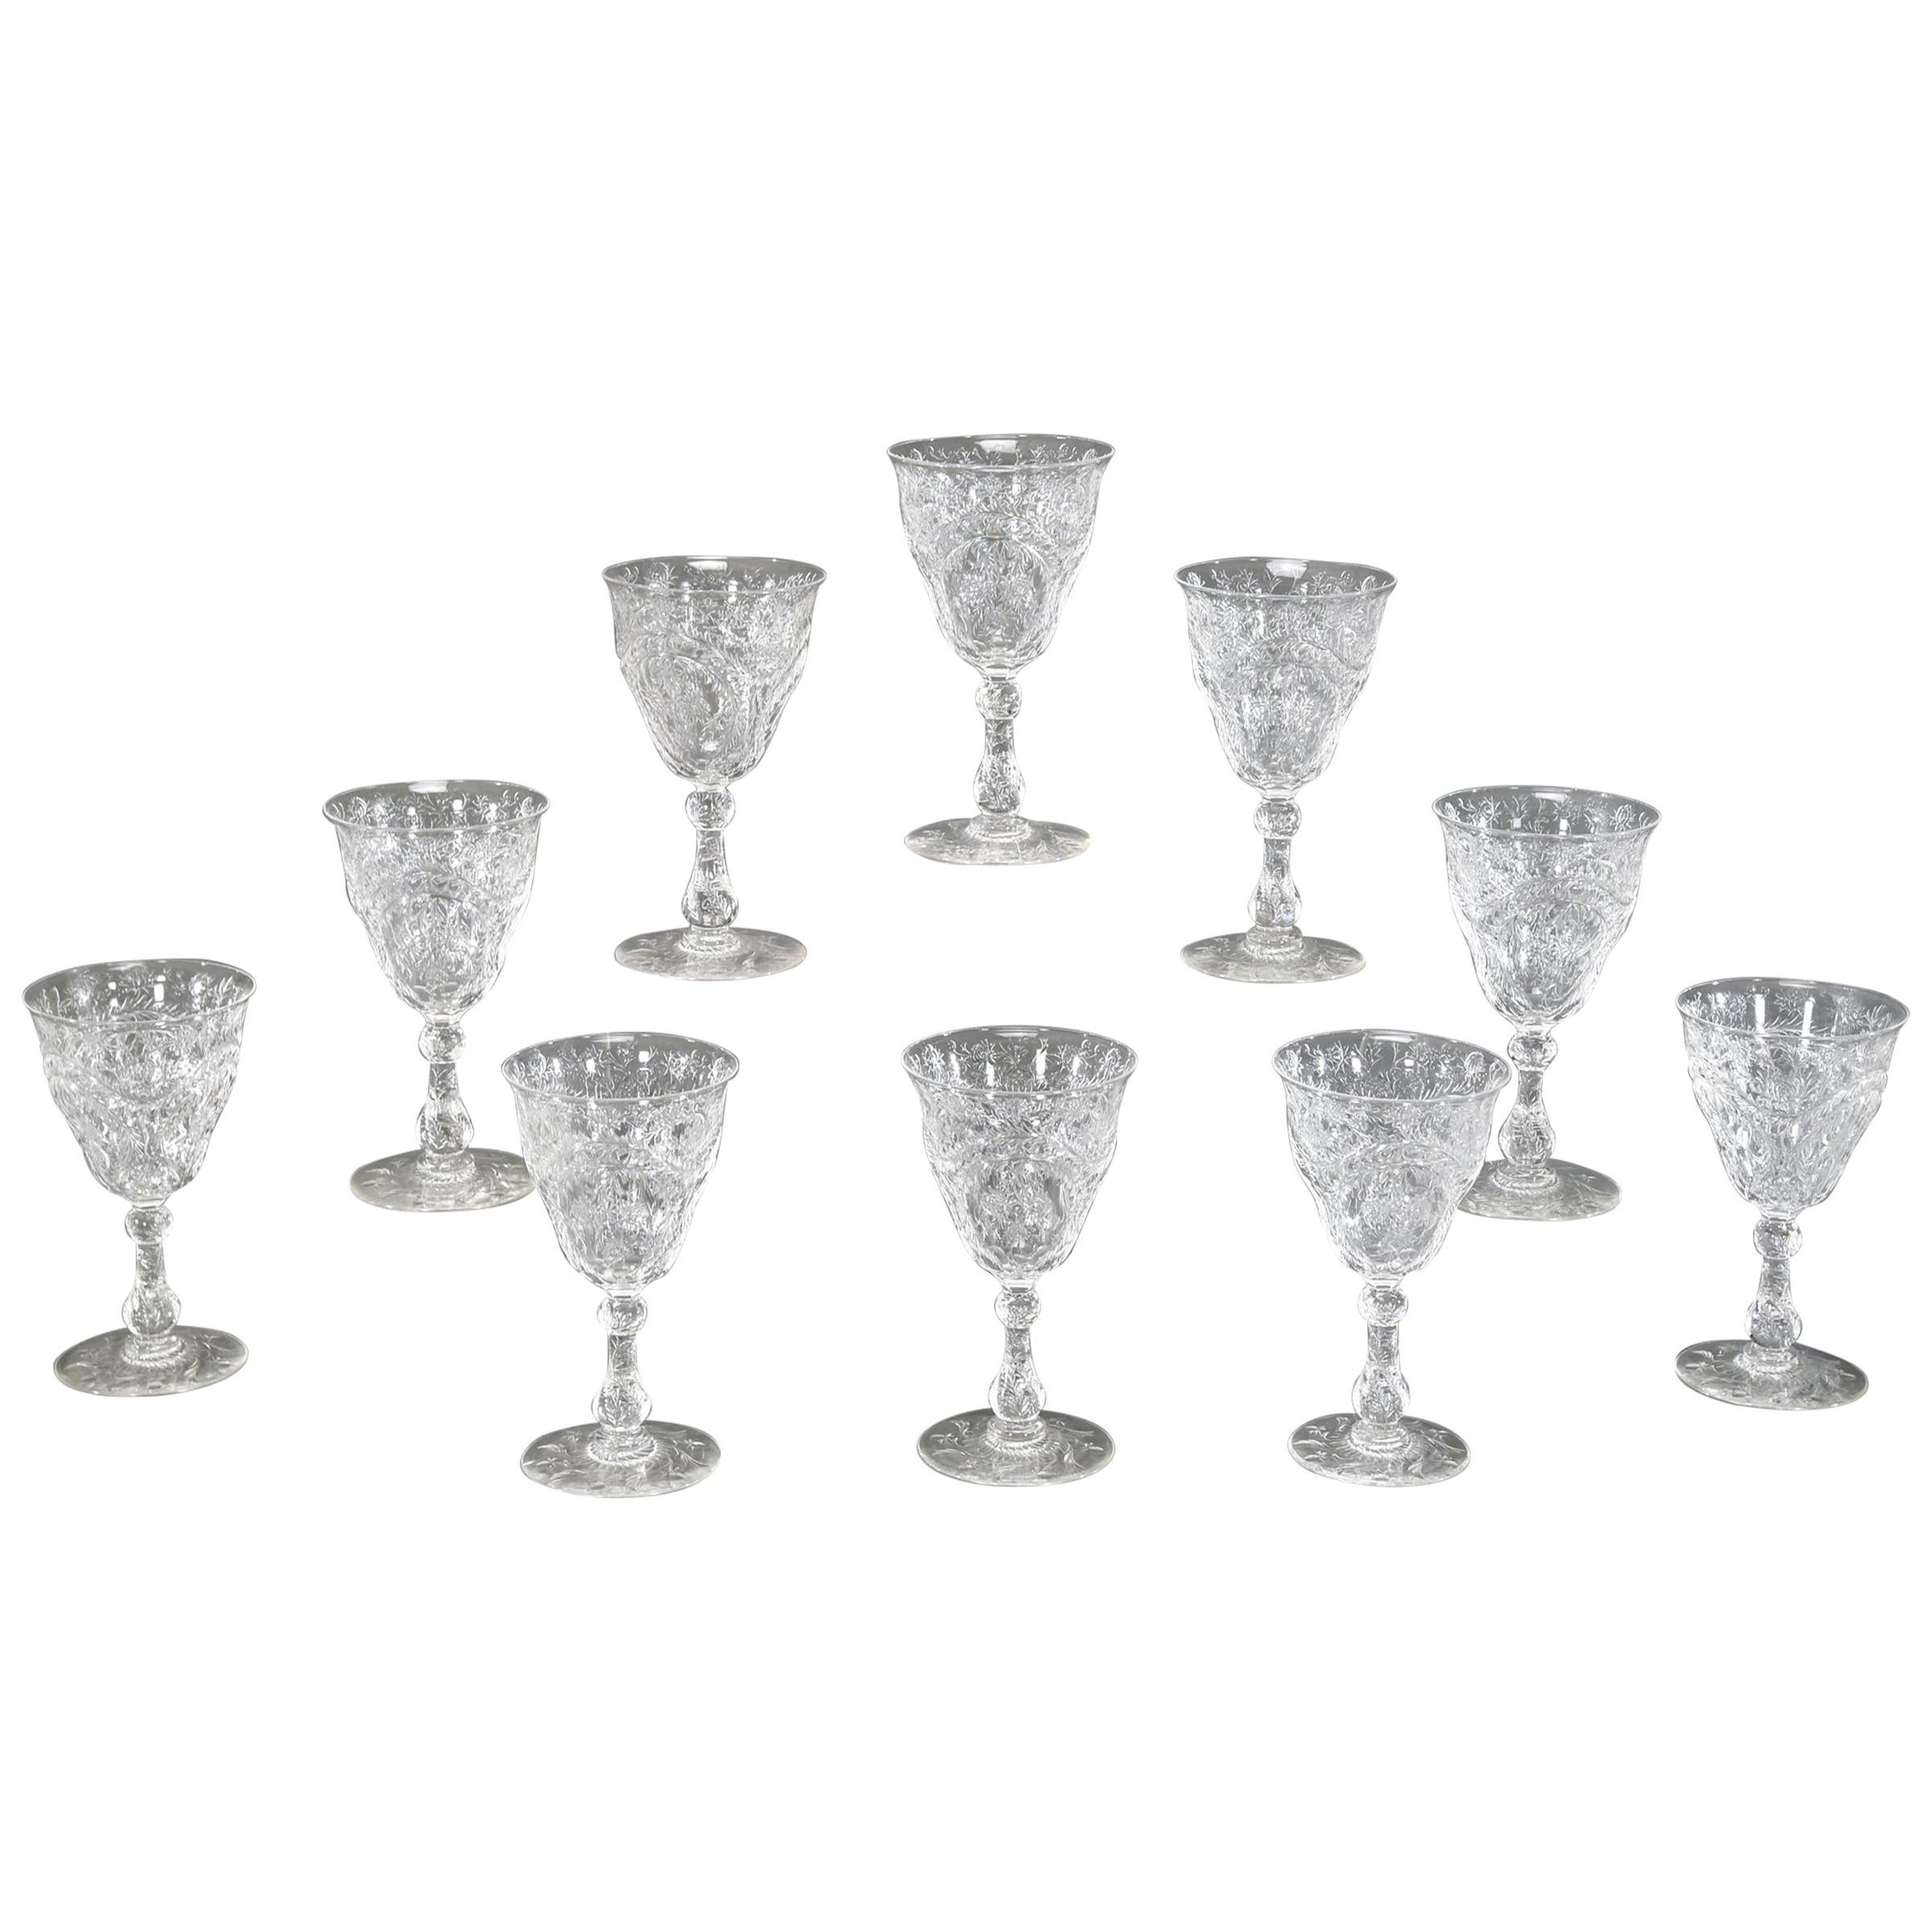 https://a.1stdibscdn.com/set-of-10-webb-hand-blown-rock-crystal-engraved-goblets-w-thistles-artichokes-for-sale/1121189/f_228313121616537546596/22831312_master.jpg